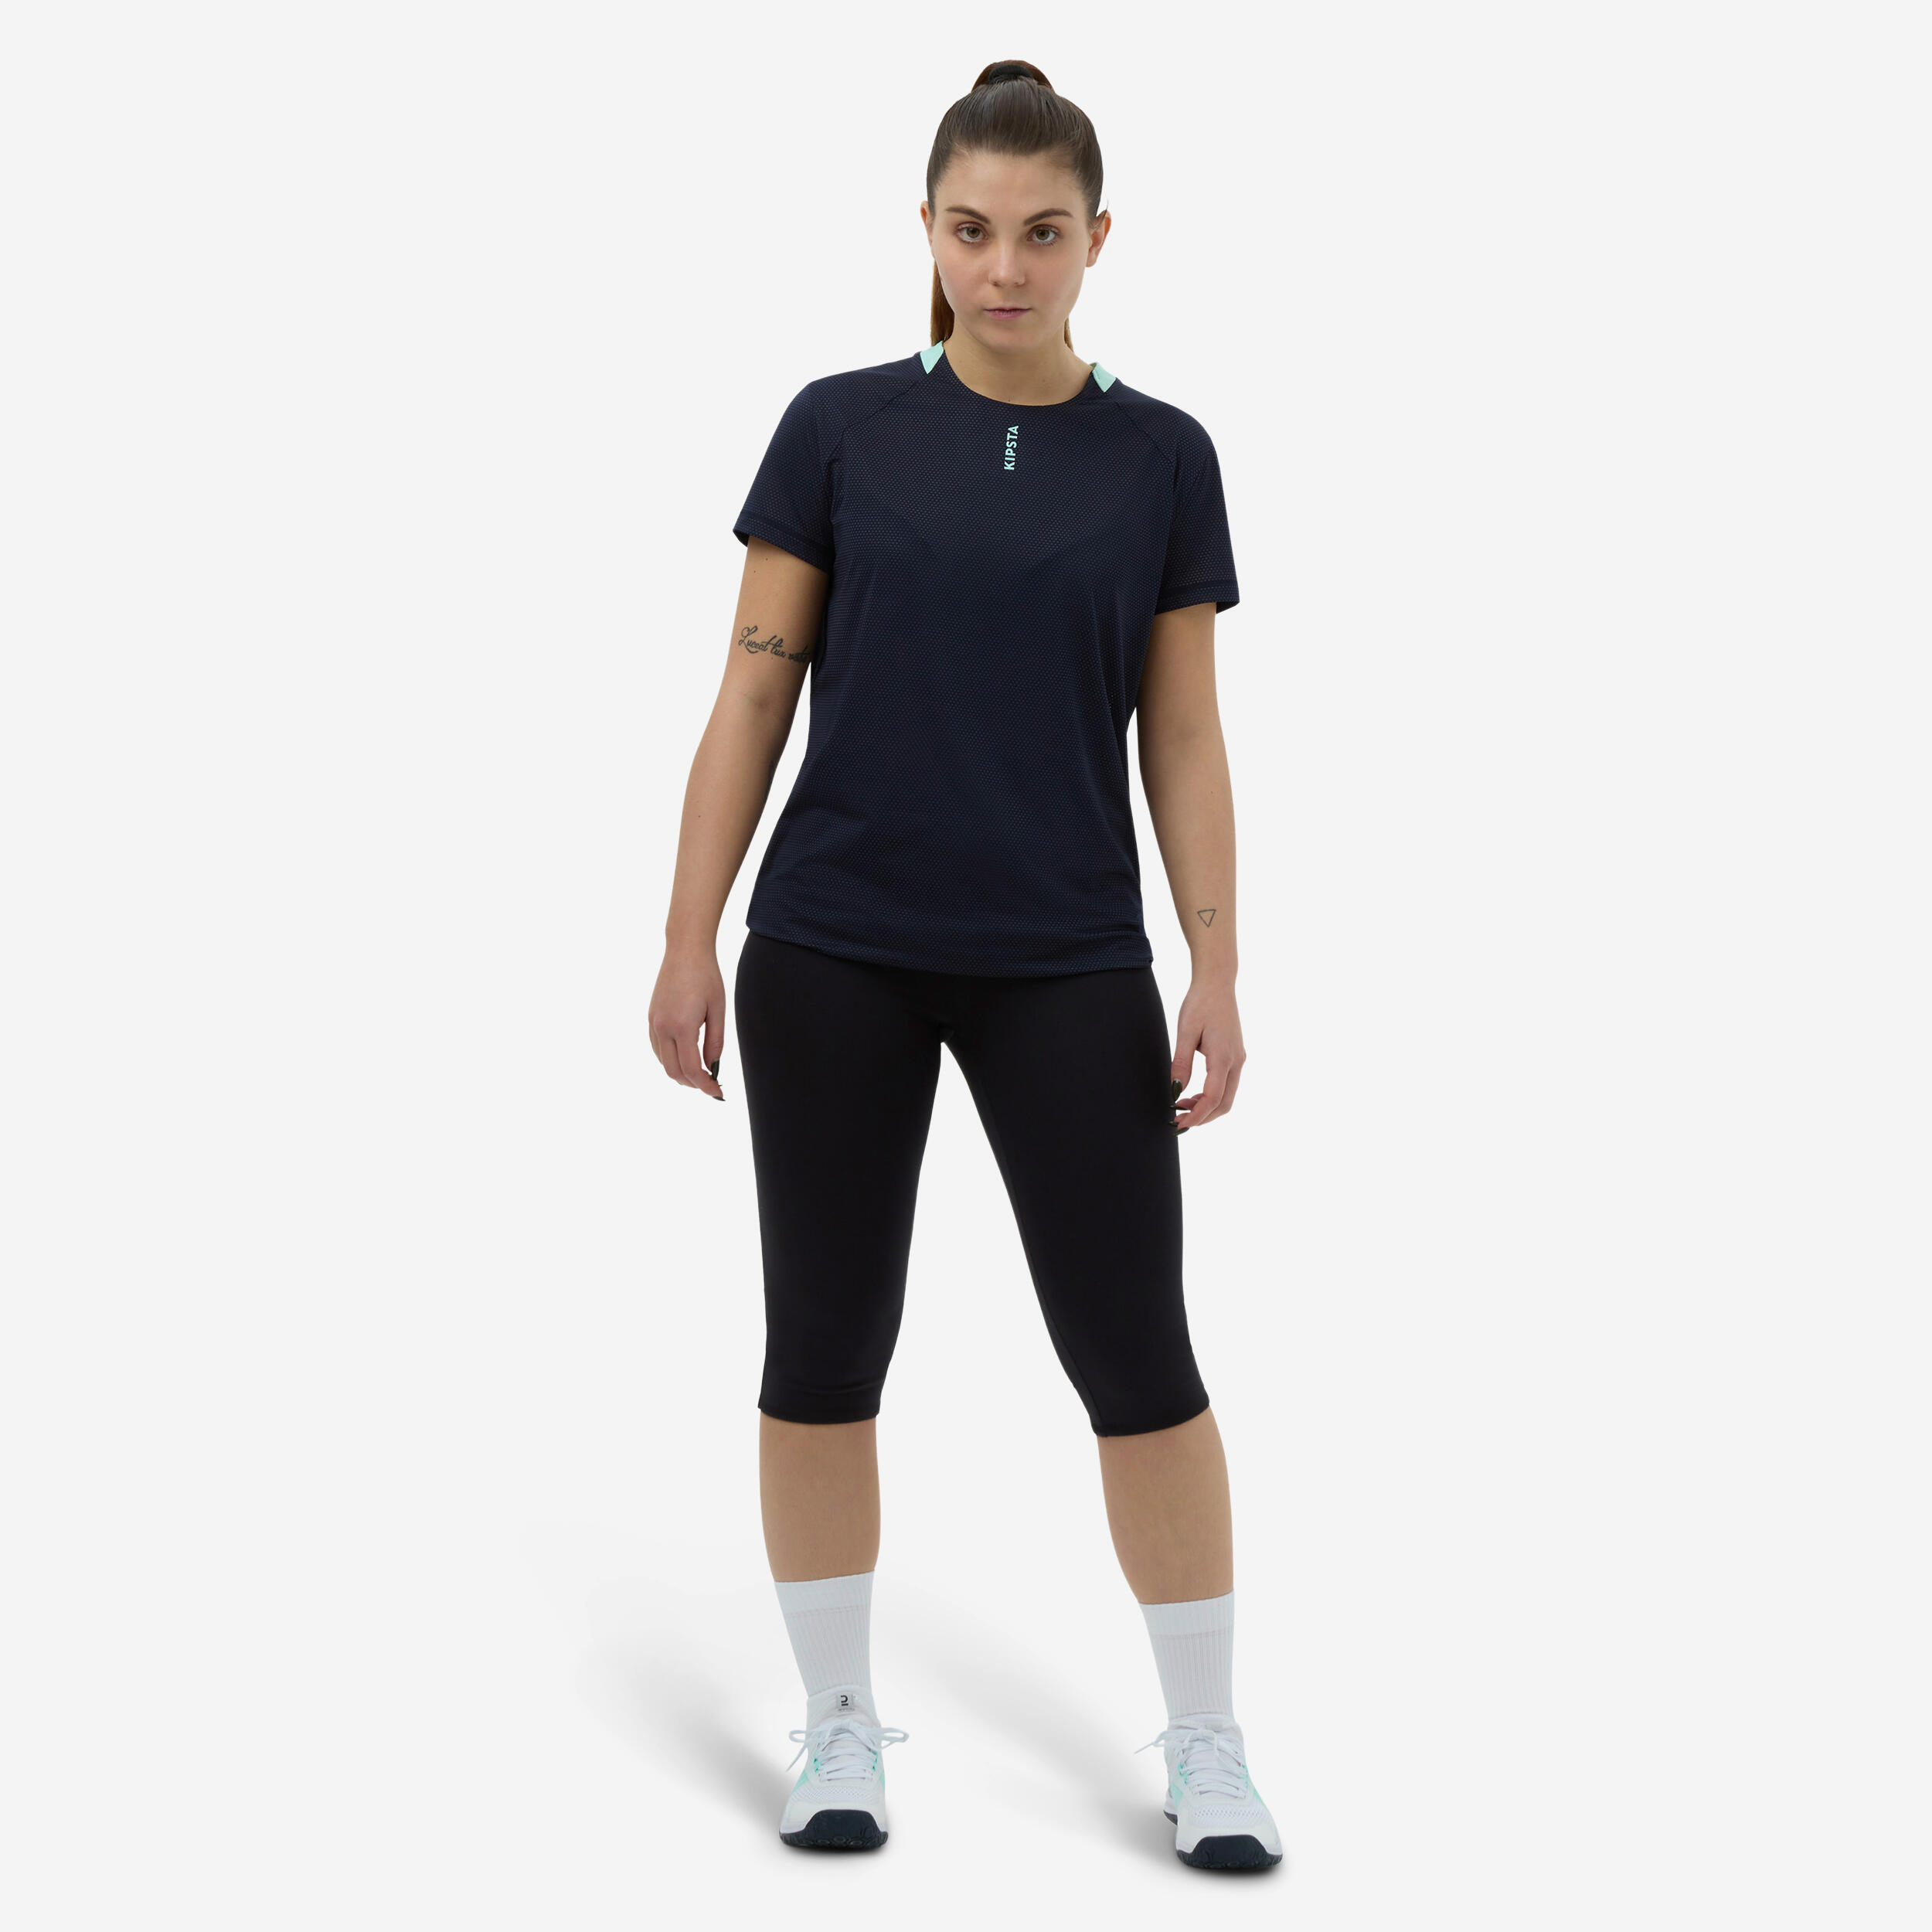 ALLSIX Women's Cotton Volleyball Leggings - Black